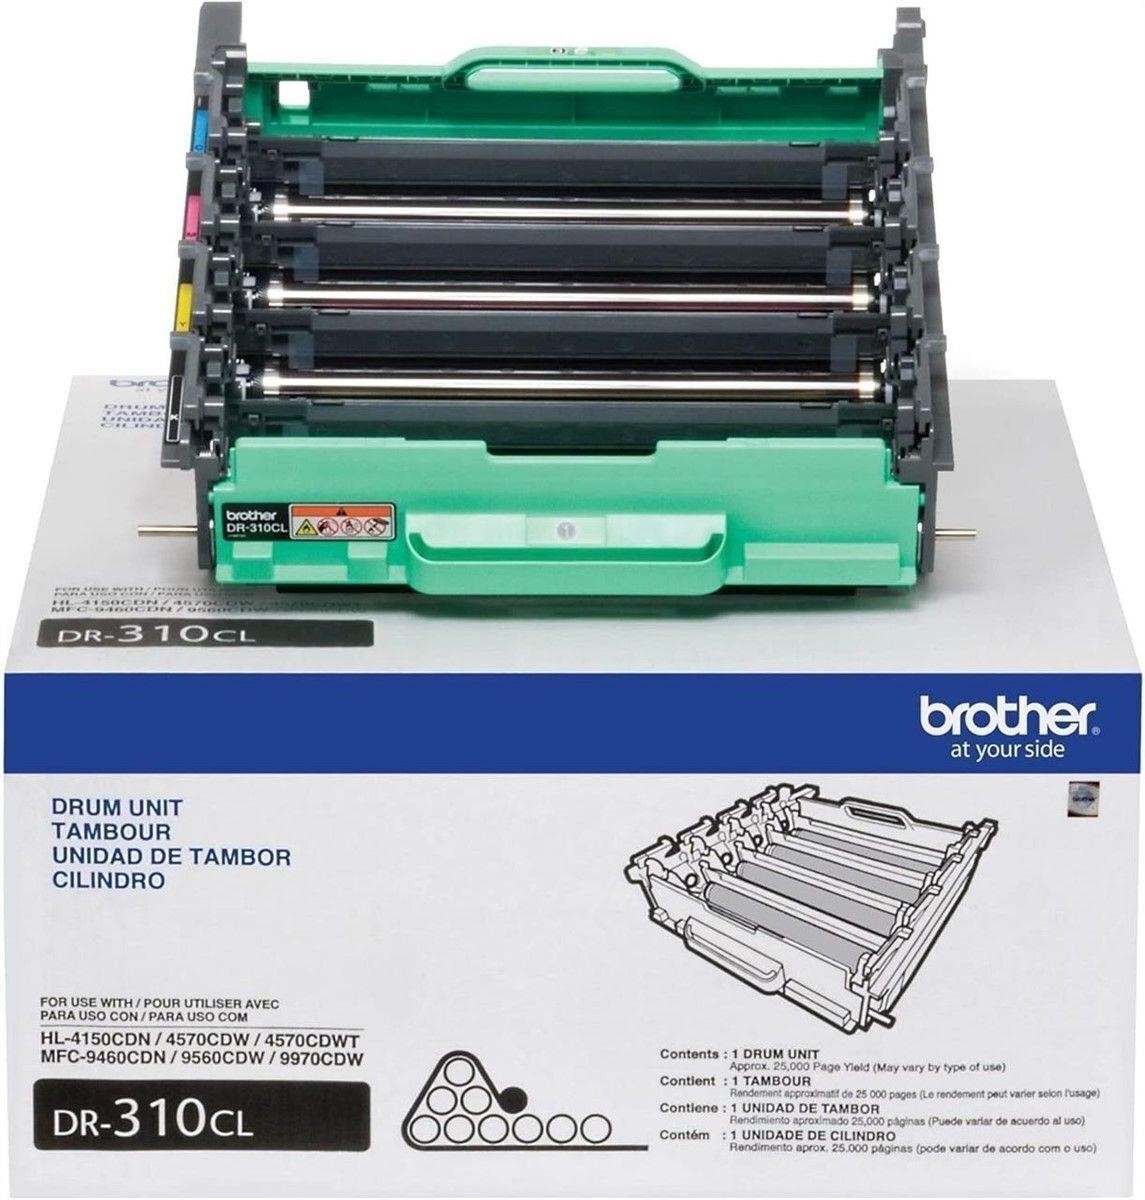 $199 Brother Printer Cartridge